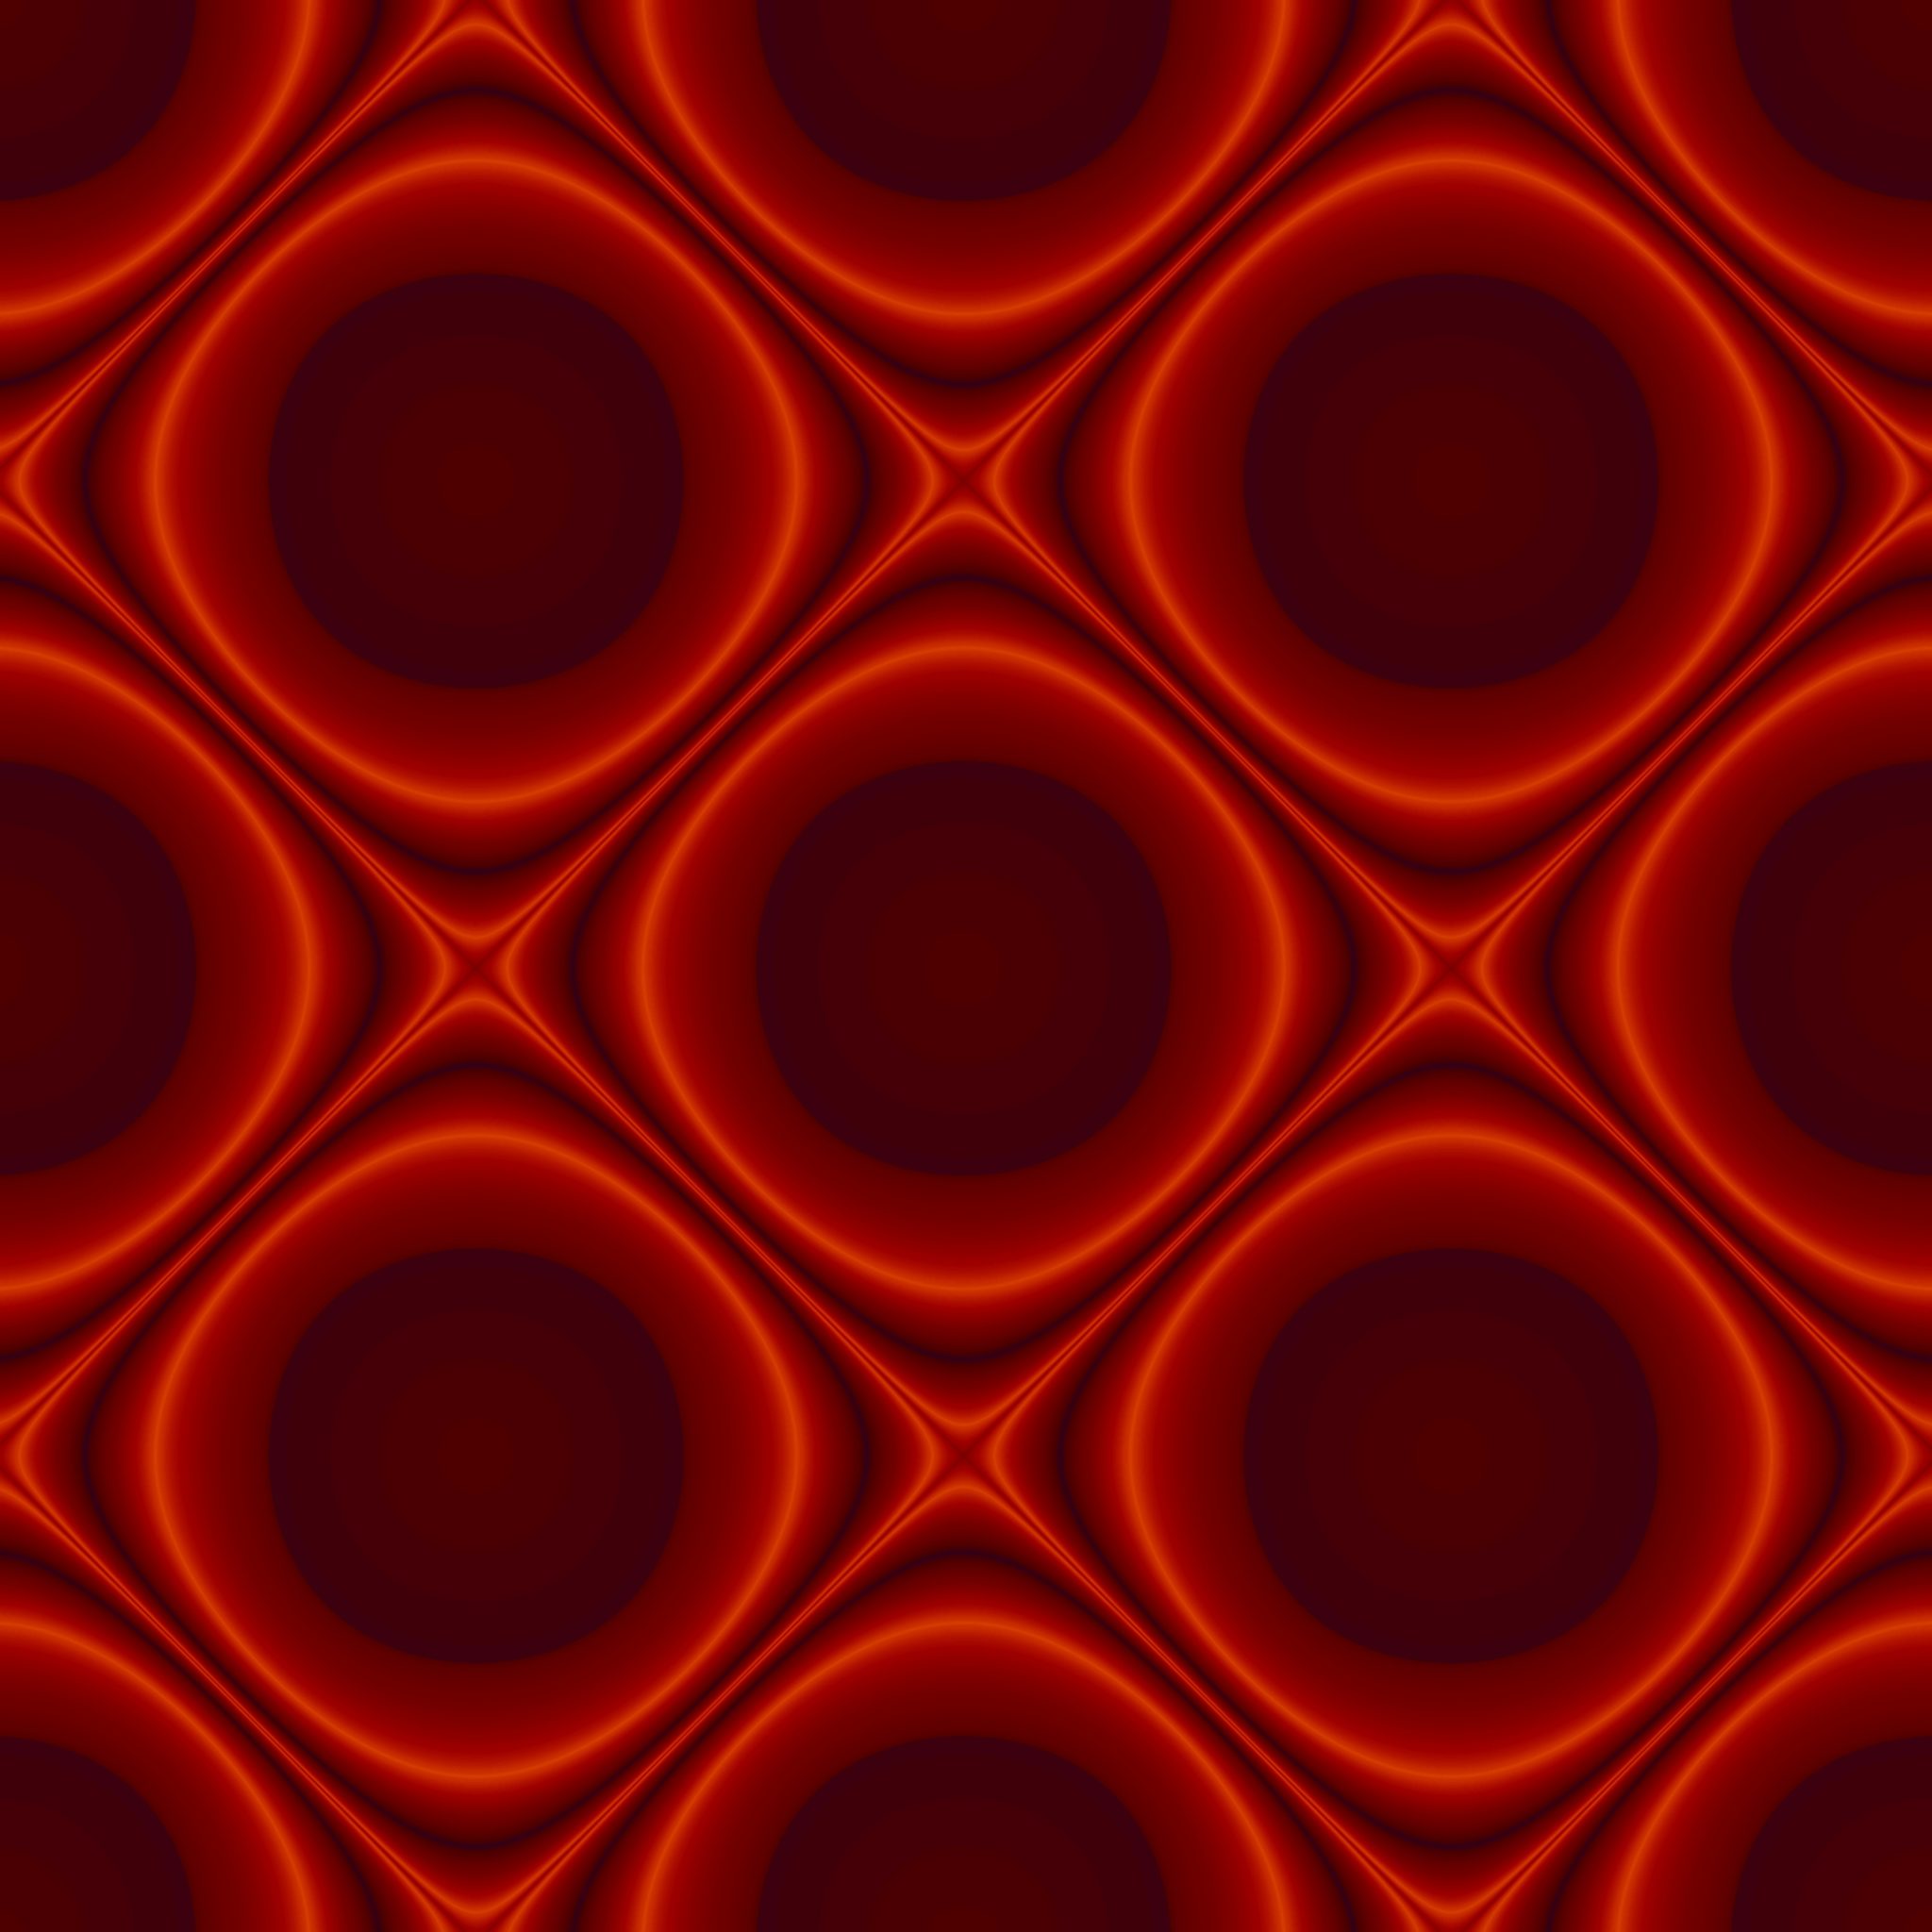 2048x2048 wallpapers iPad retina Abstract Pattern Design Red Ipad Wallpaper 2048x2048 pixels resolution